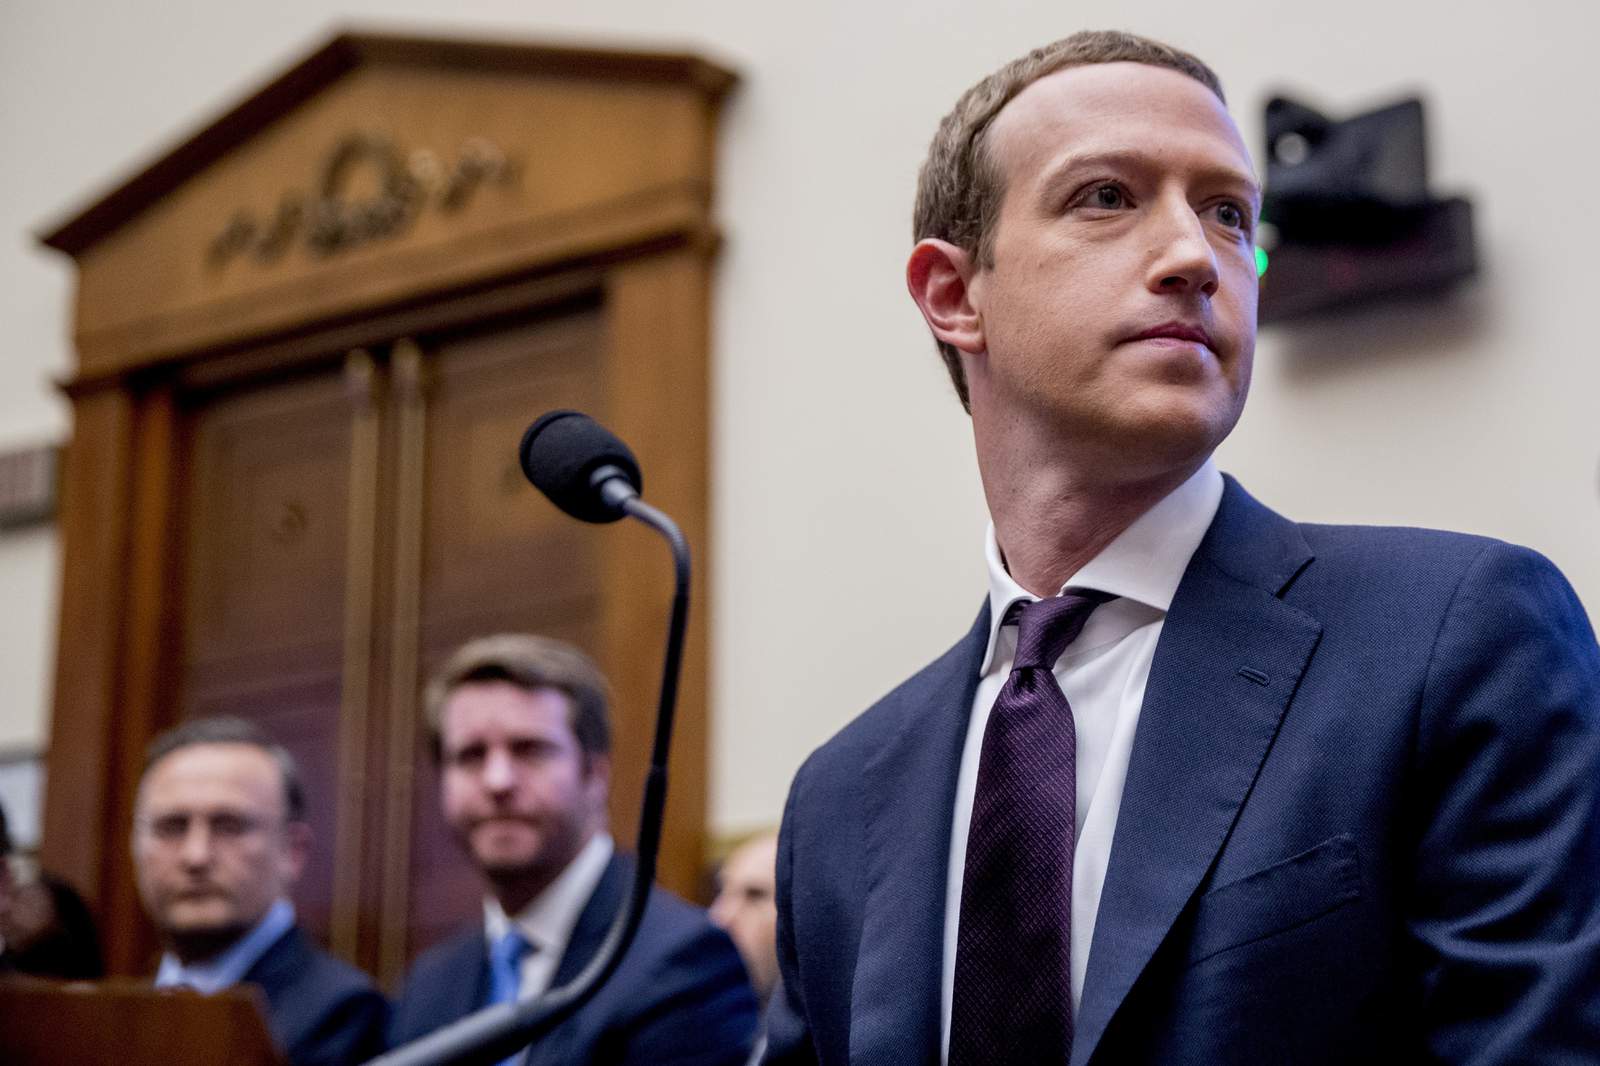 LIVE STREAM: Mark Zuckerberg, Jack Dorsey testify at Senate hearing